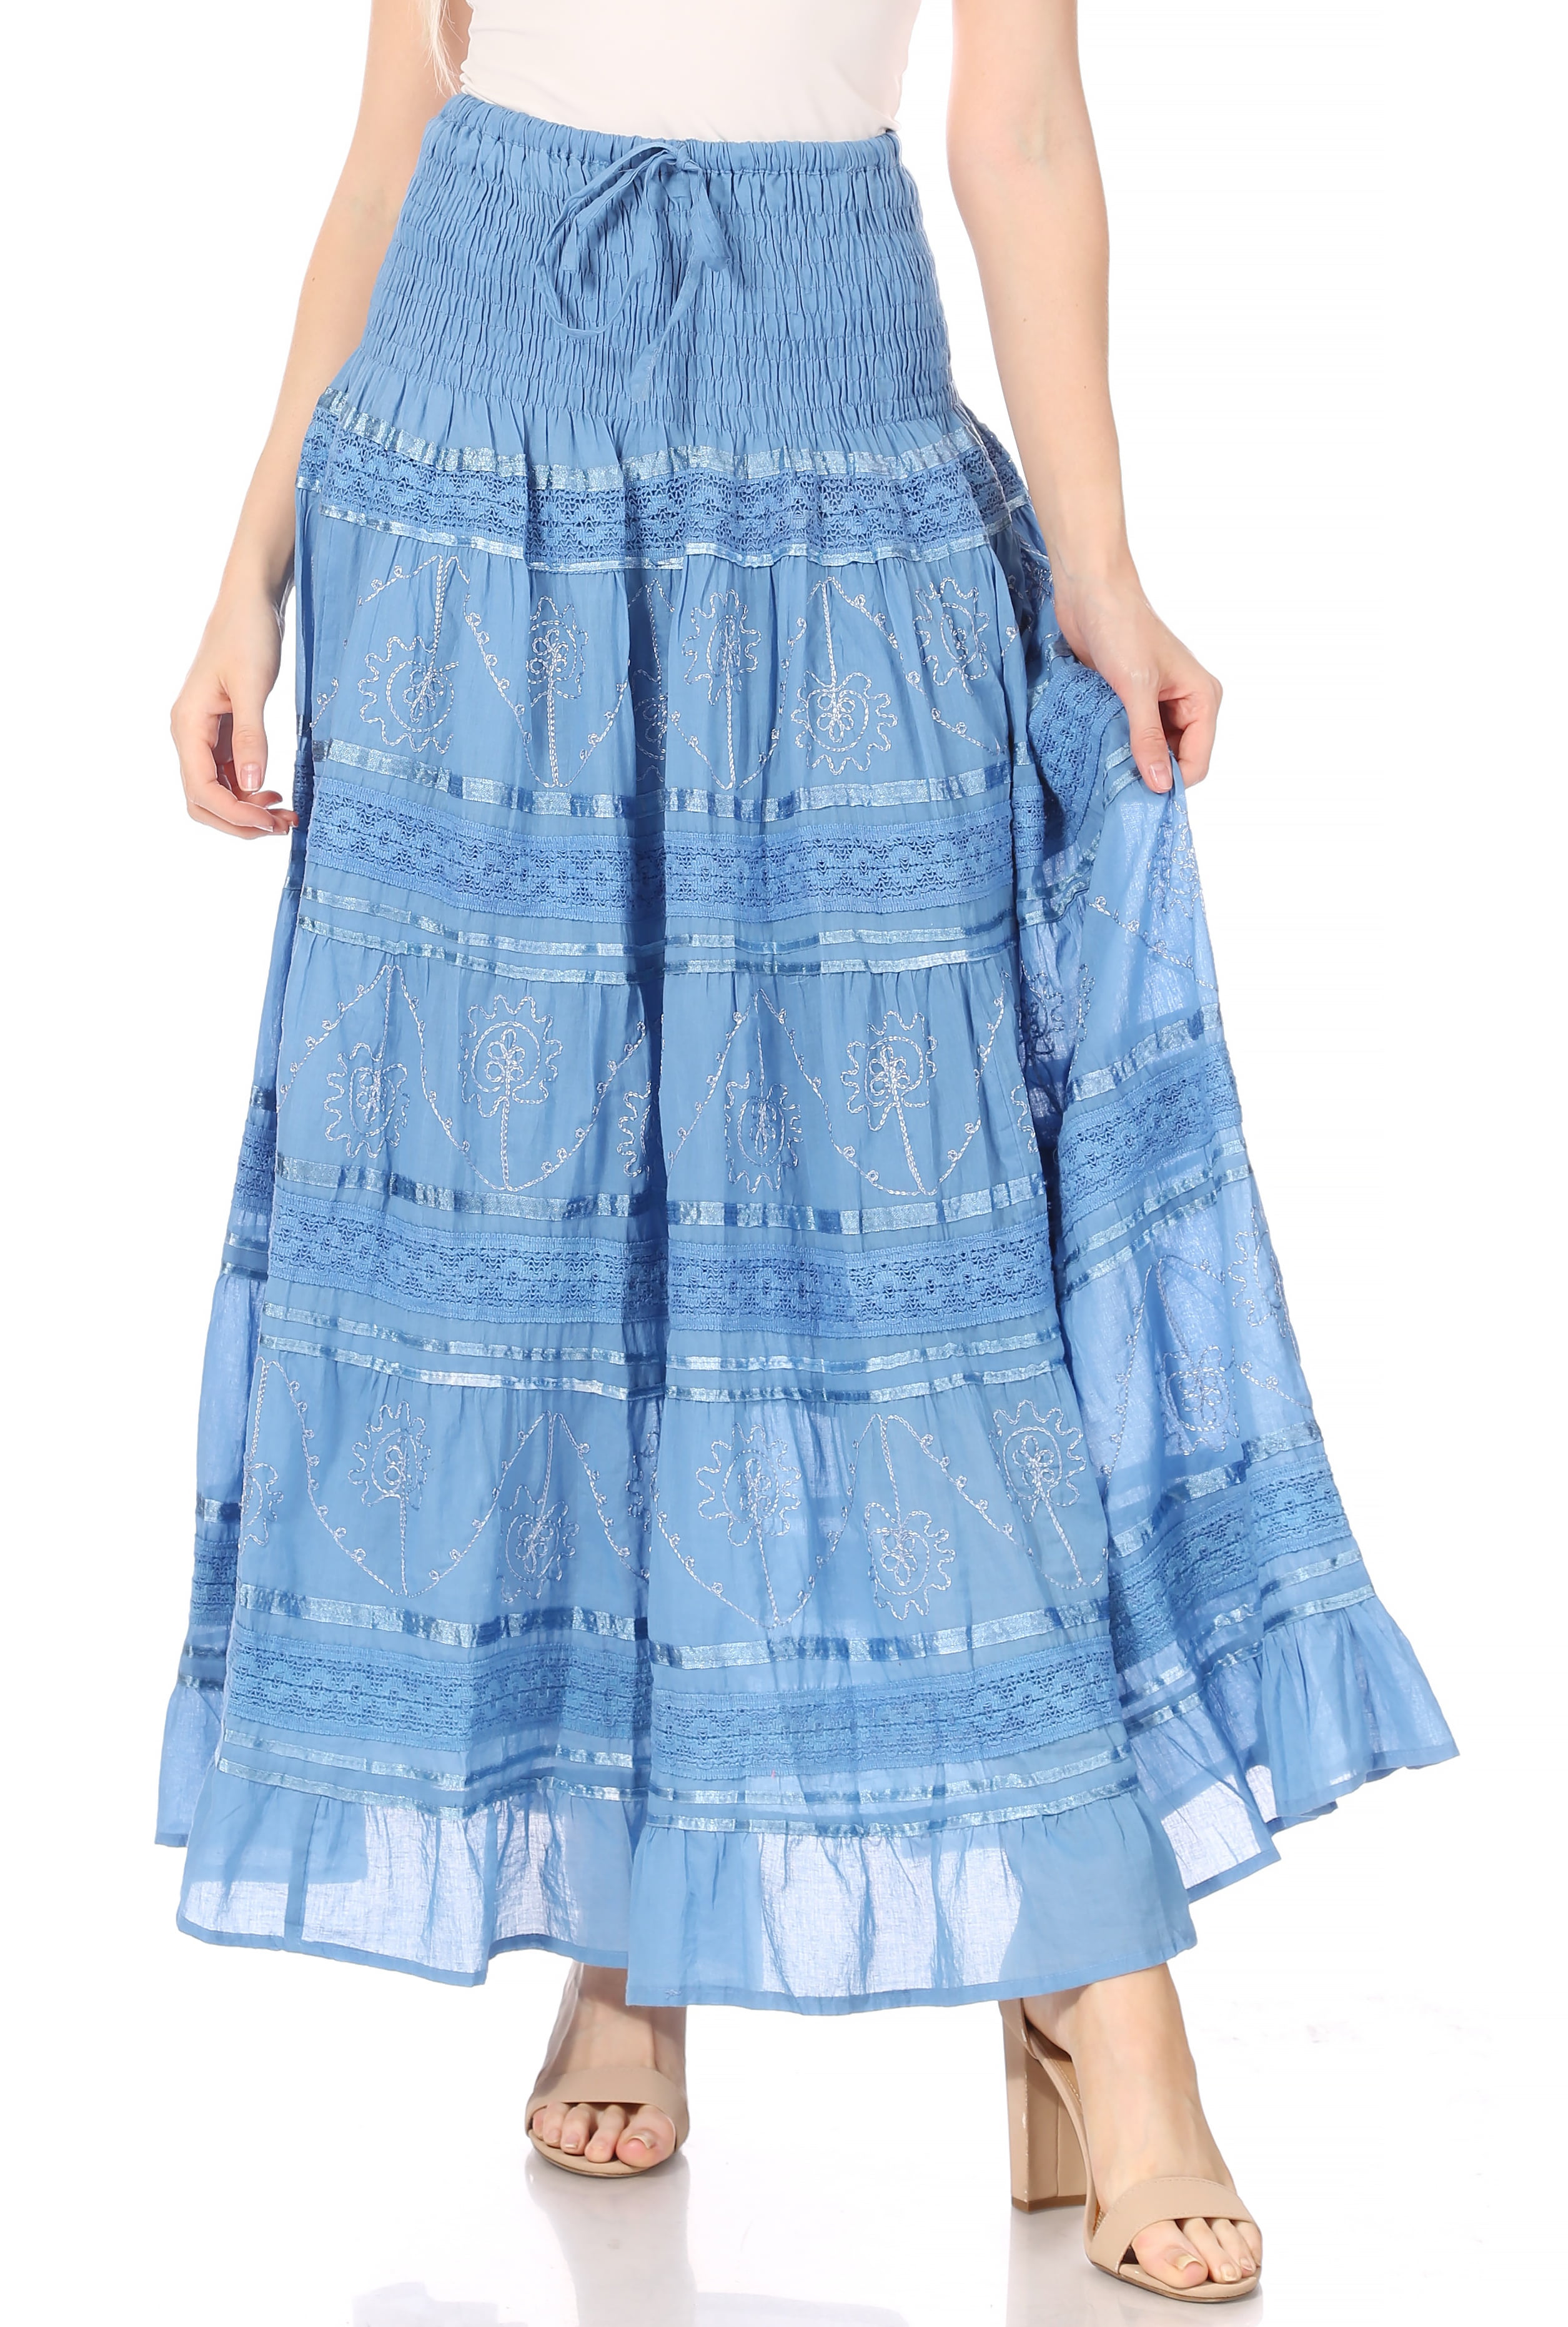 Sakkas Lace and Ribbon Peasant Boho Skirt - Sky Blue - One Size -  Walmart.com